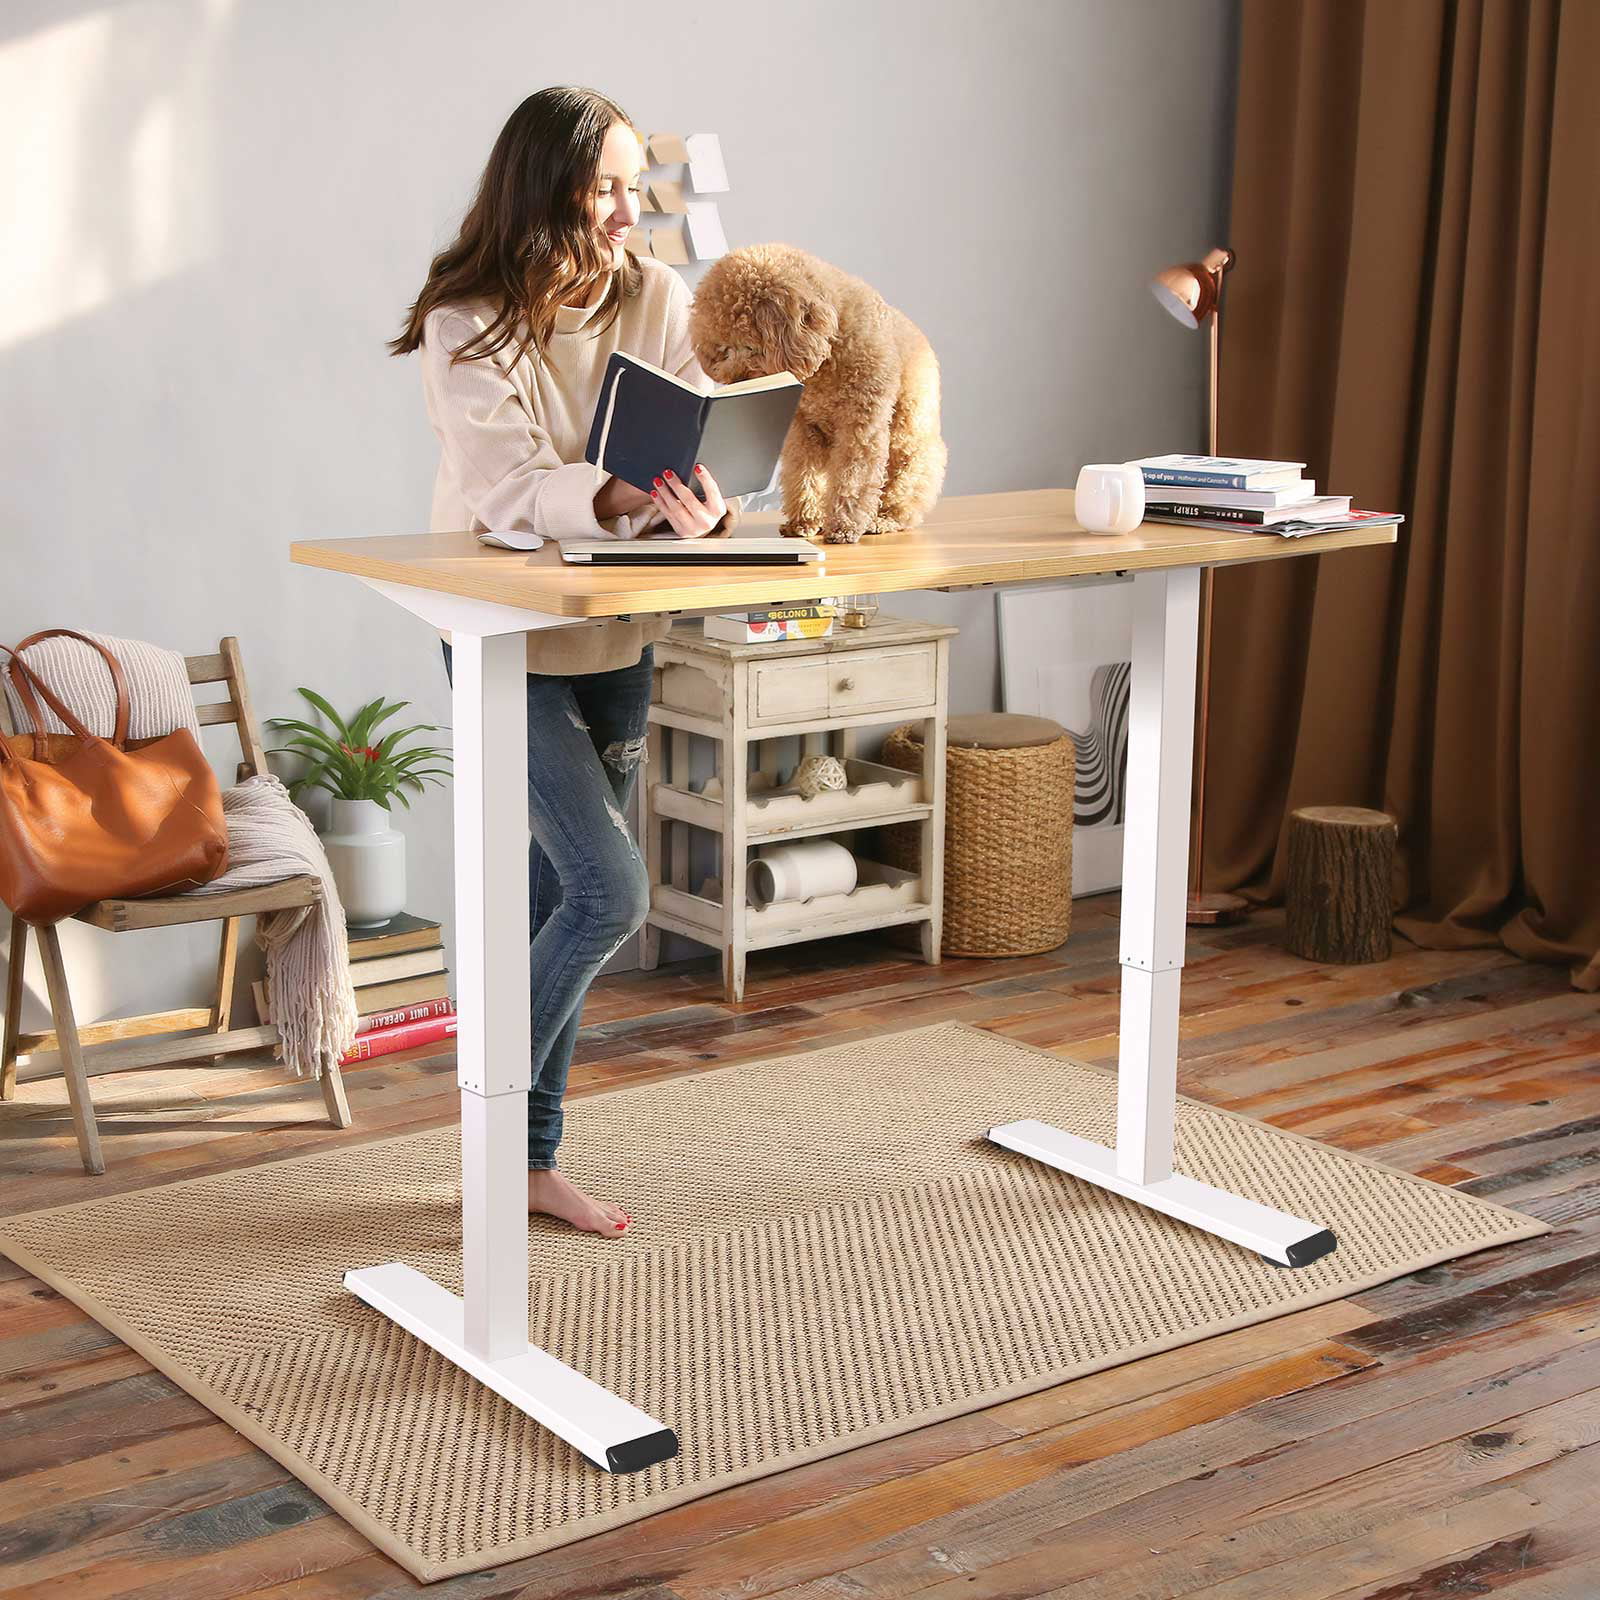 FlexiSpot Home Office Electric Height Adjustable Standing Desk 48